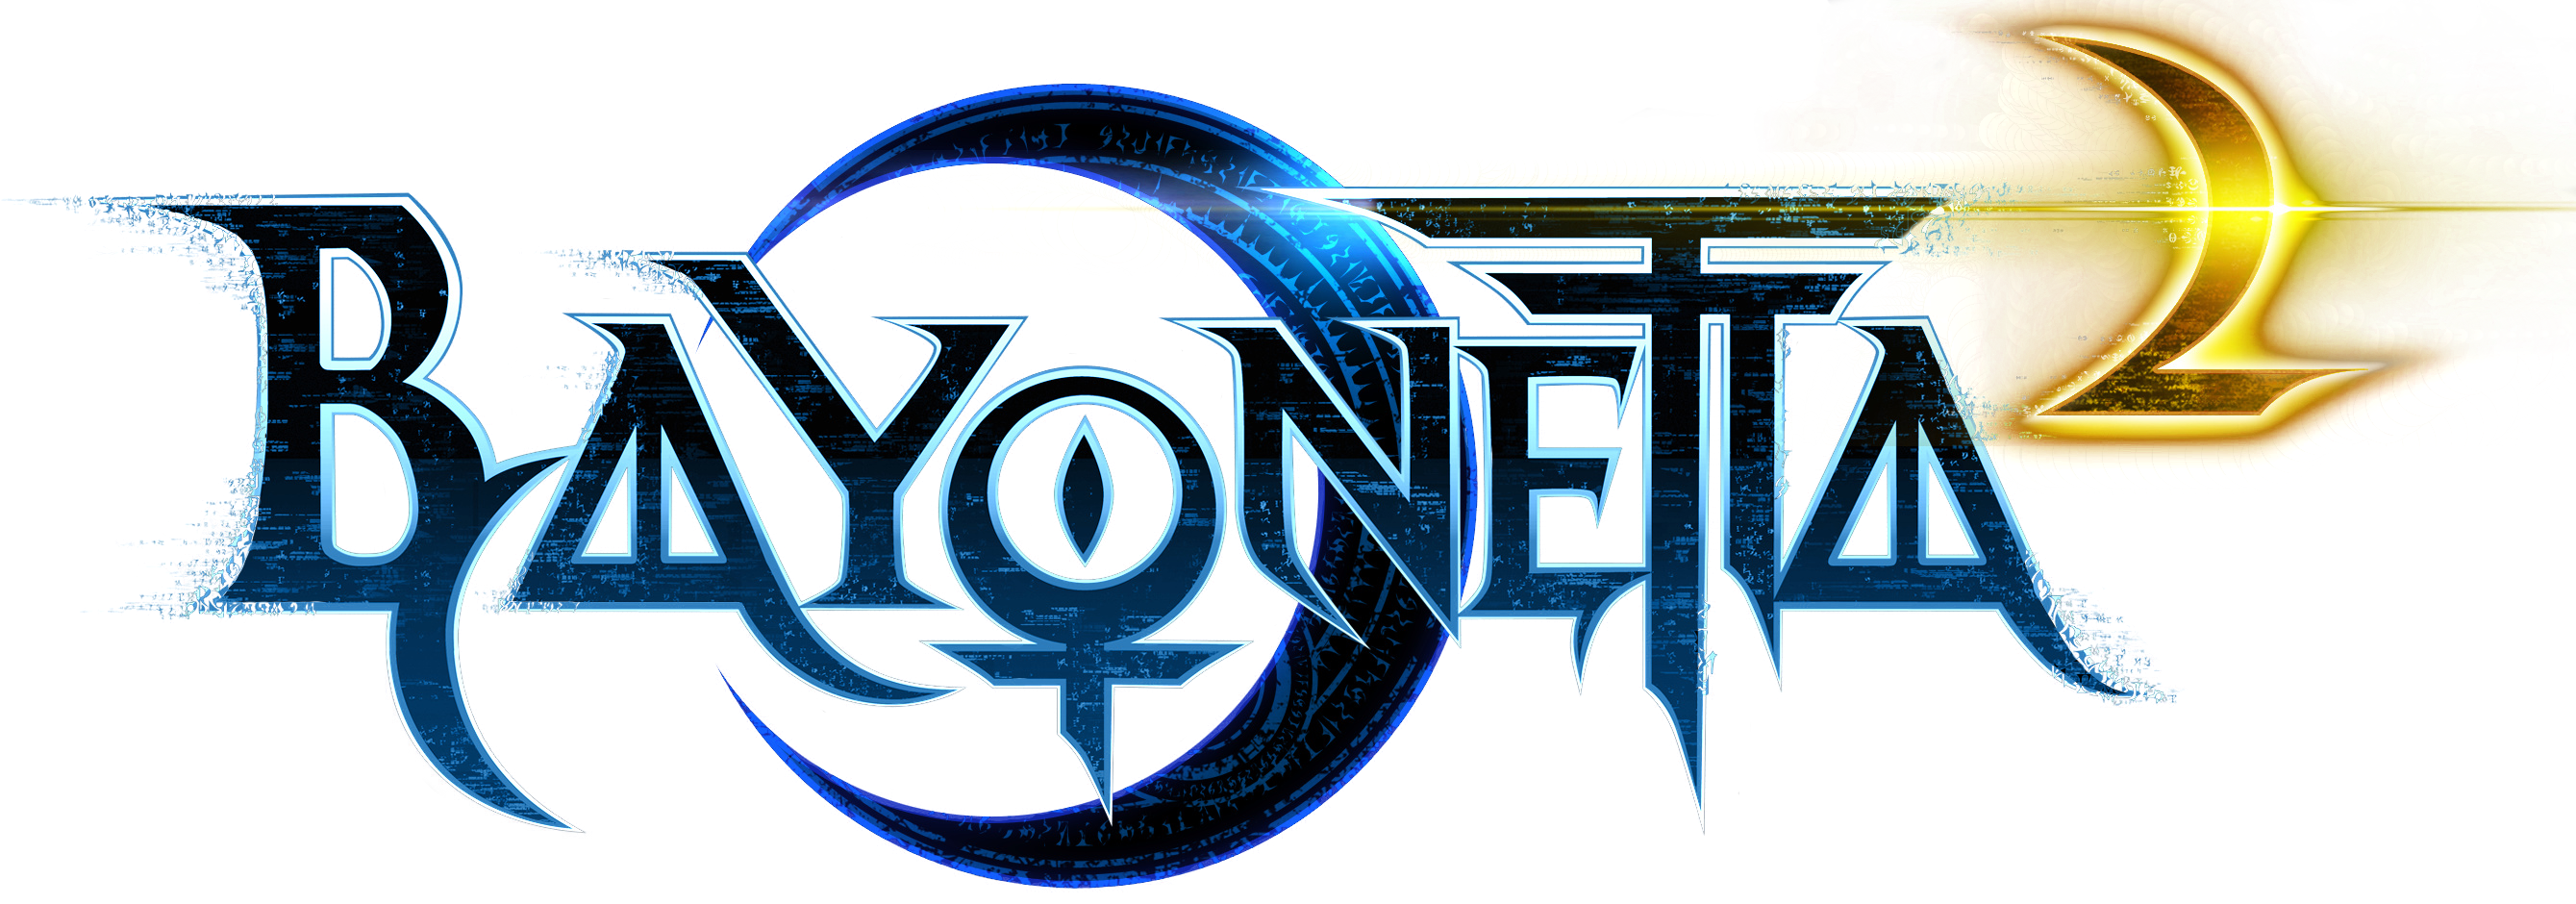 Logo_bayonetta_2_render_by_the_ultimafire-d6a2emi